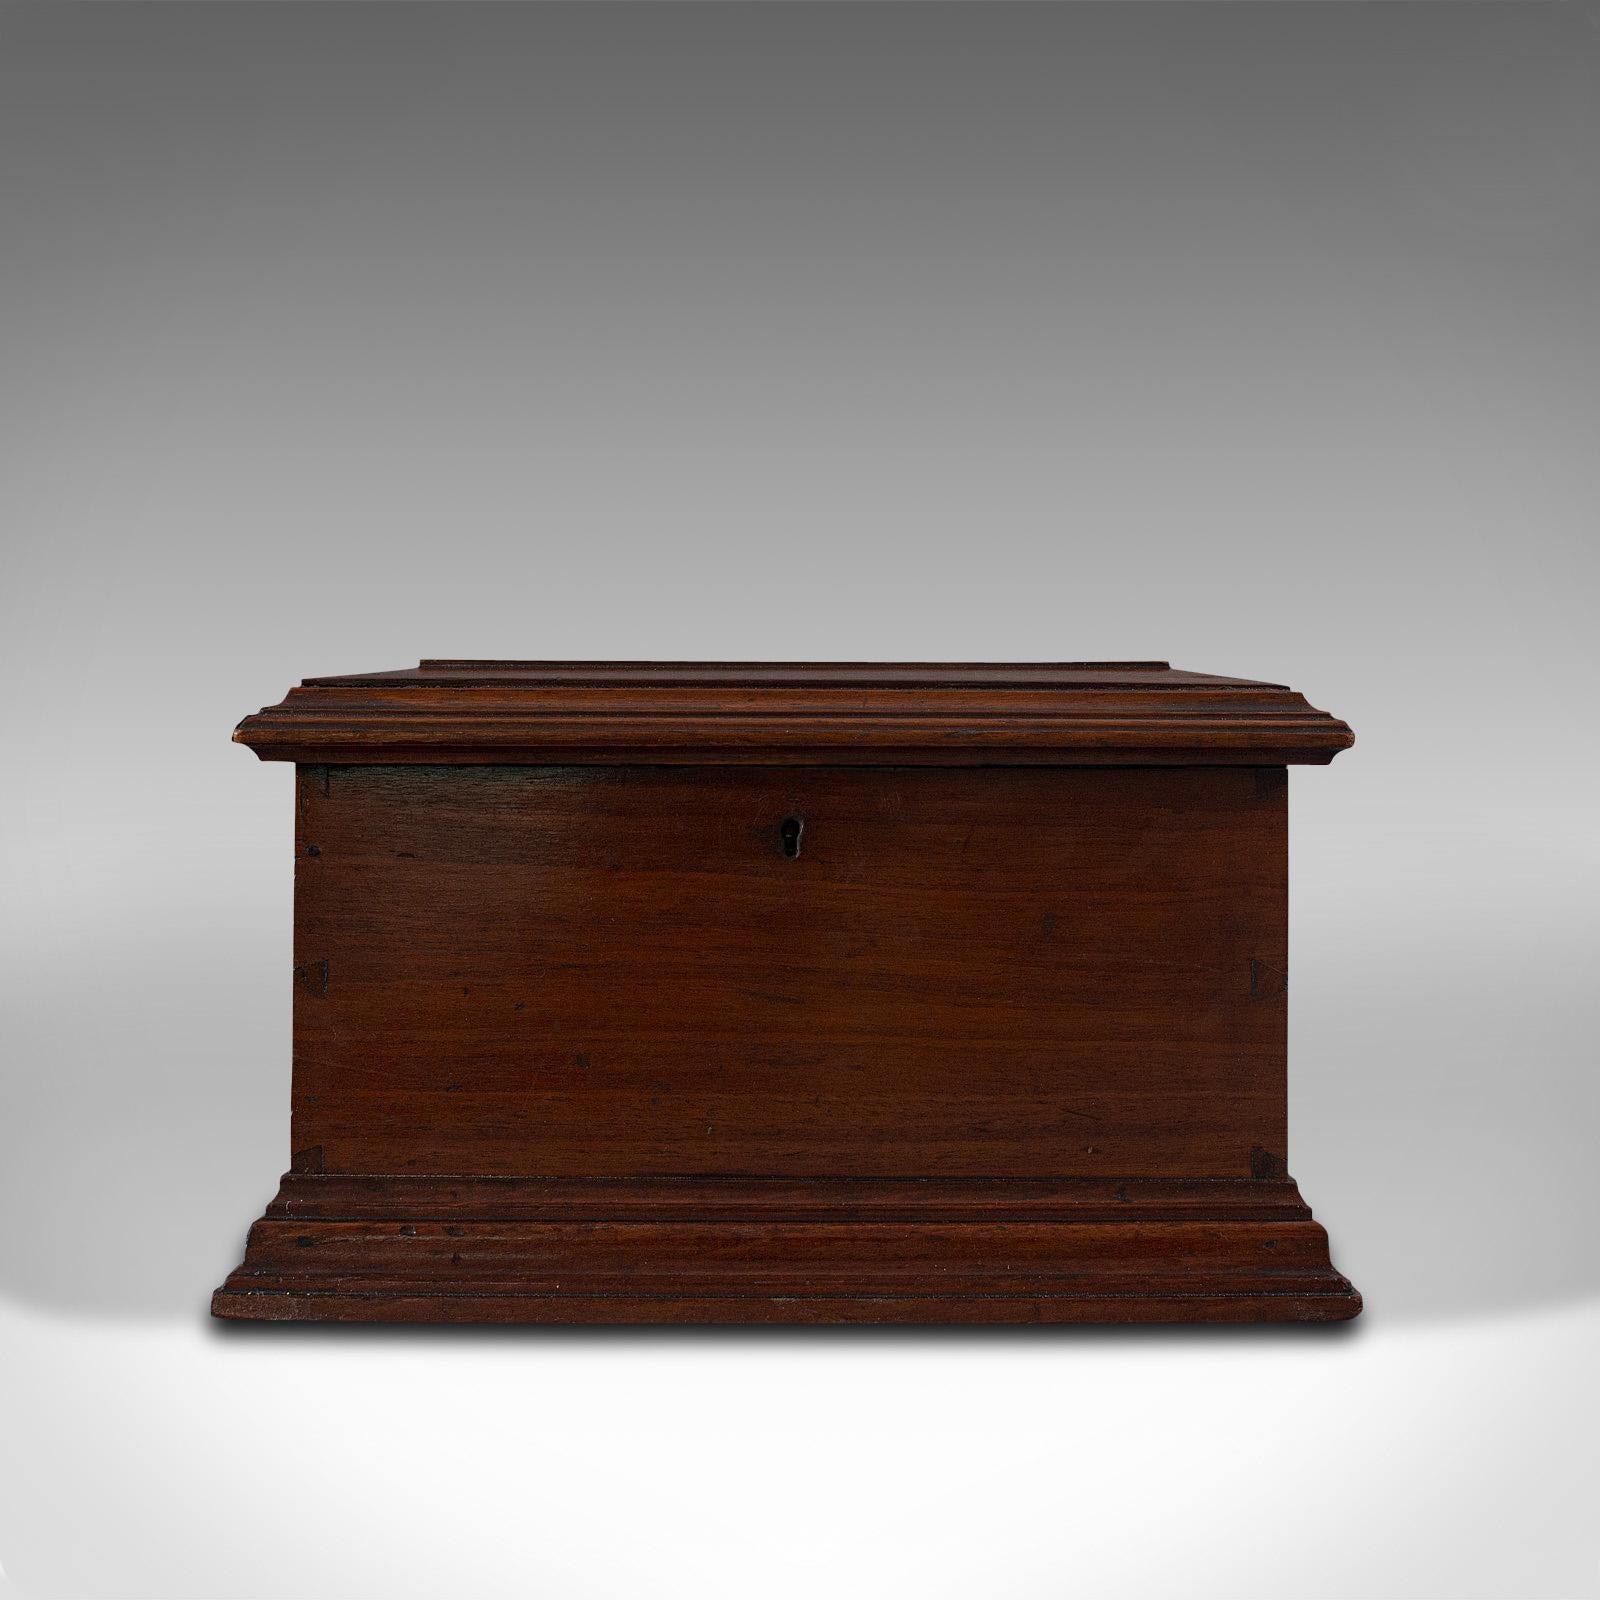 British Small Antique Document Box, English, Walnut, Desk, Pen, Sarcophagus, Victorian